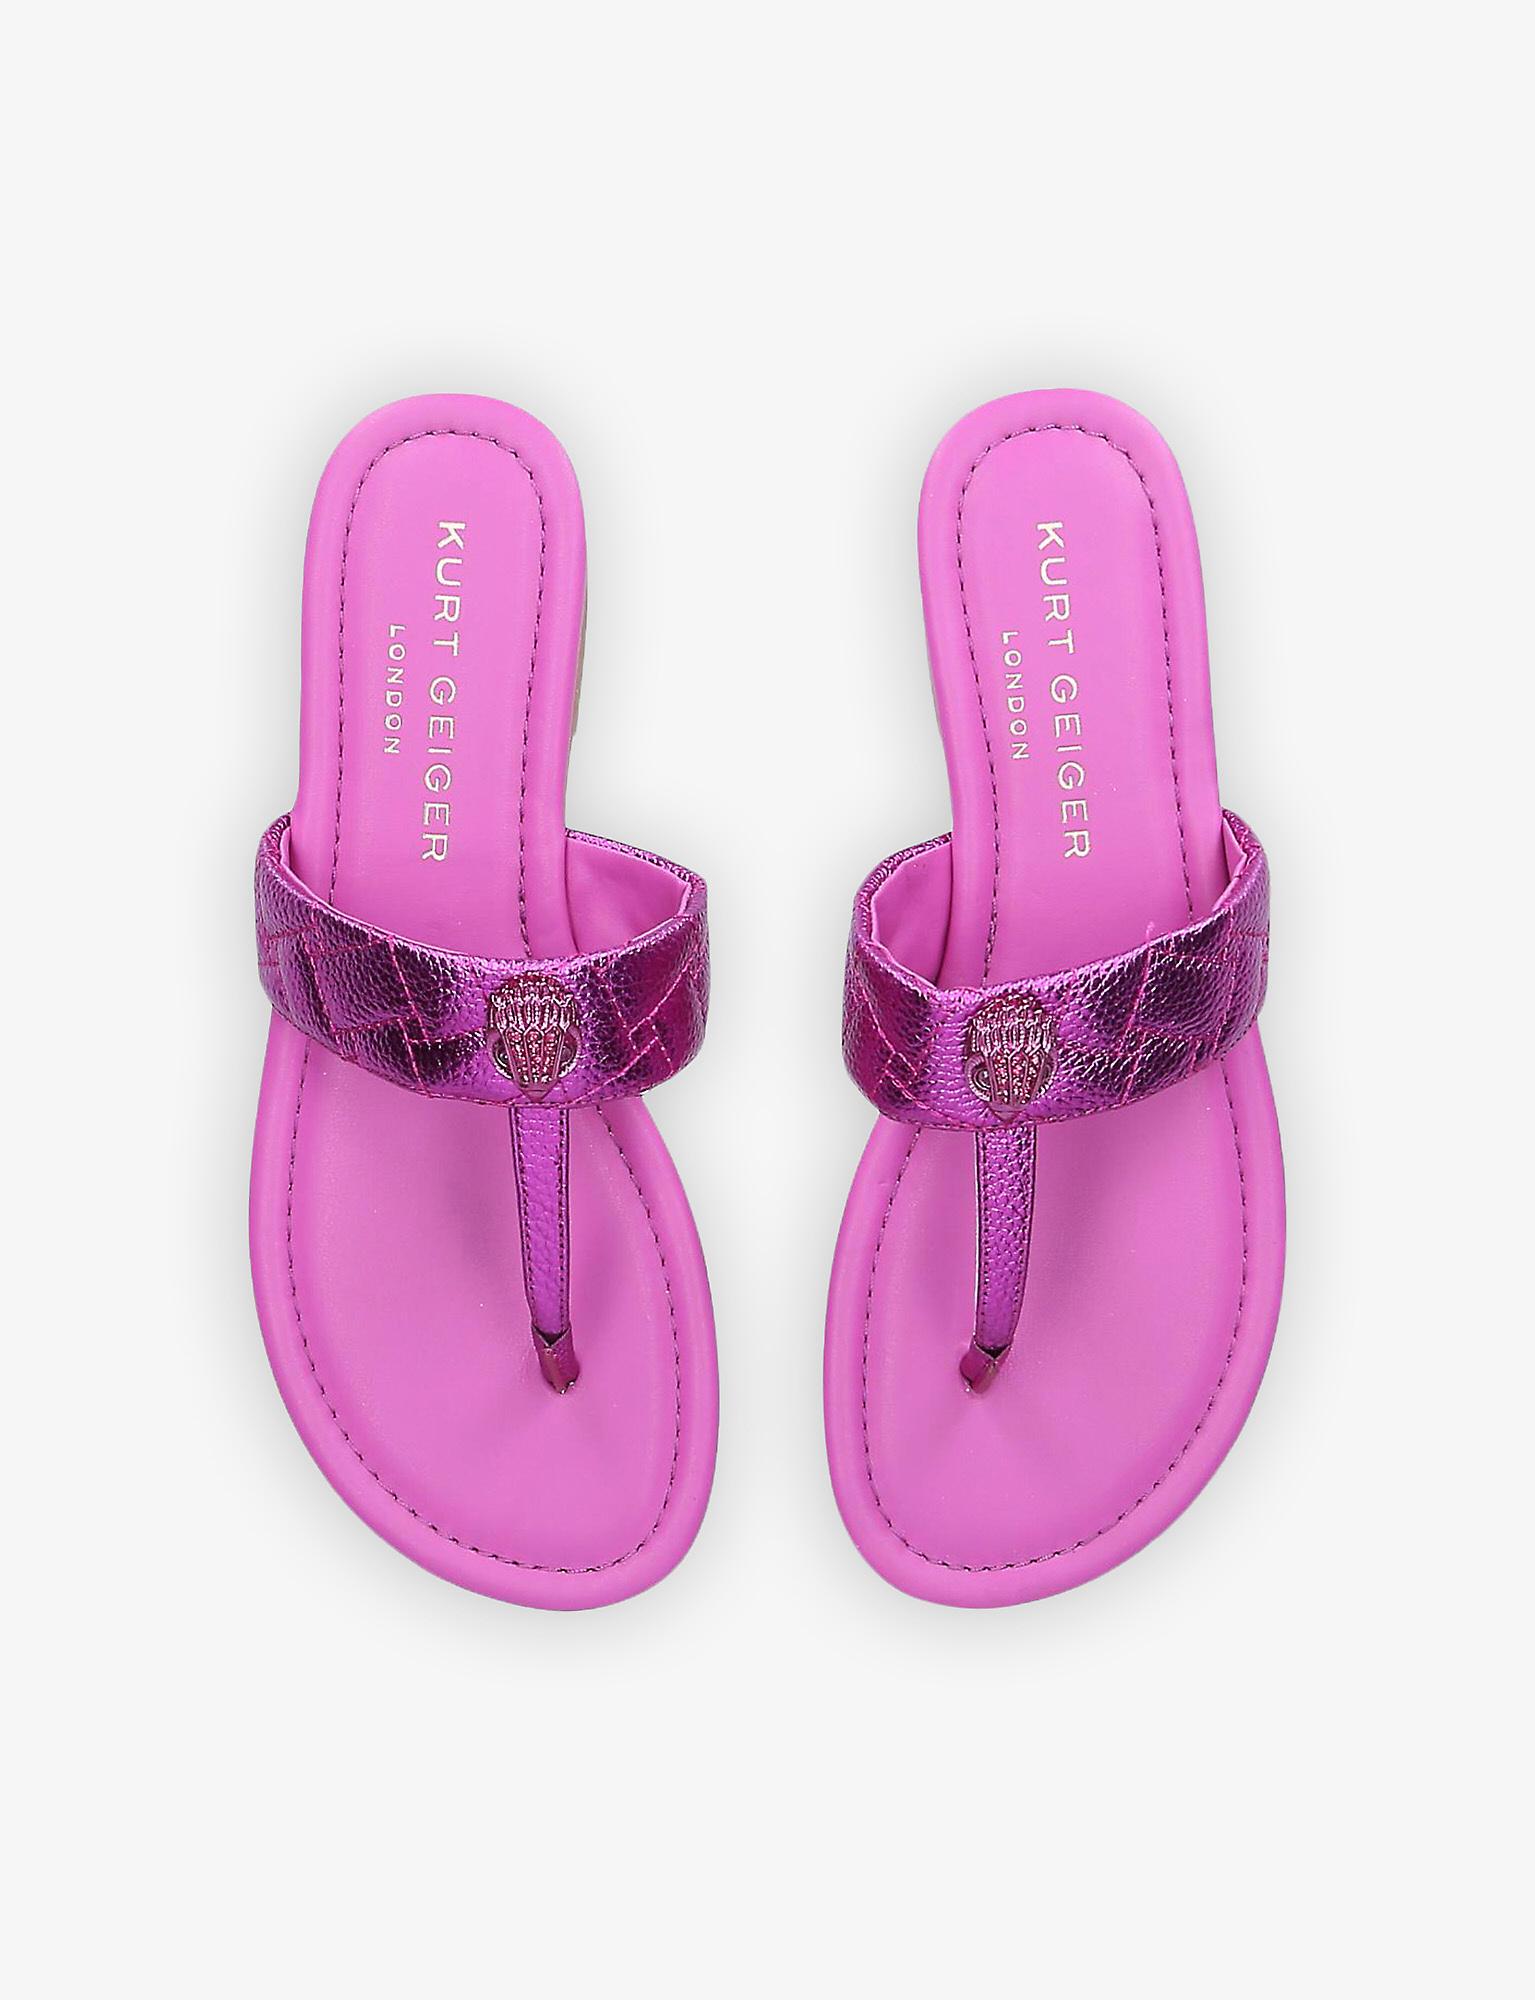 Kurt Geiger Kensington T-bar Leather Sandals in Pink | Lyst